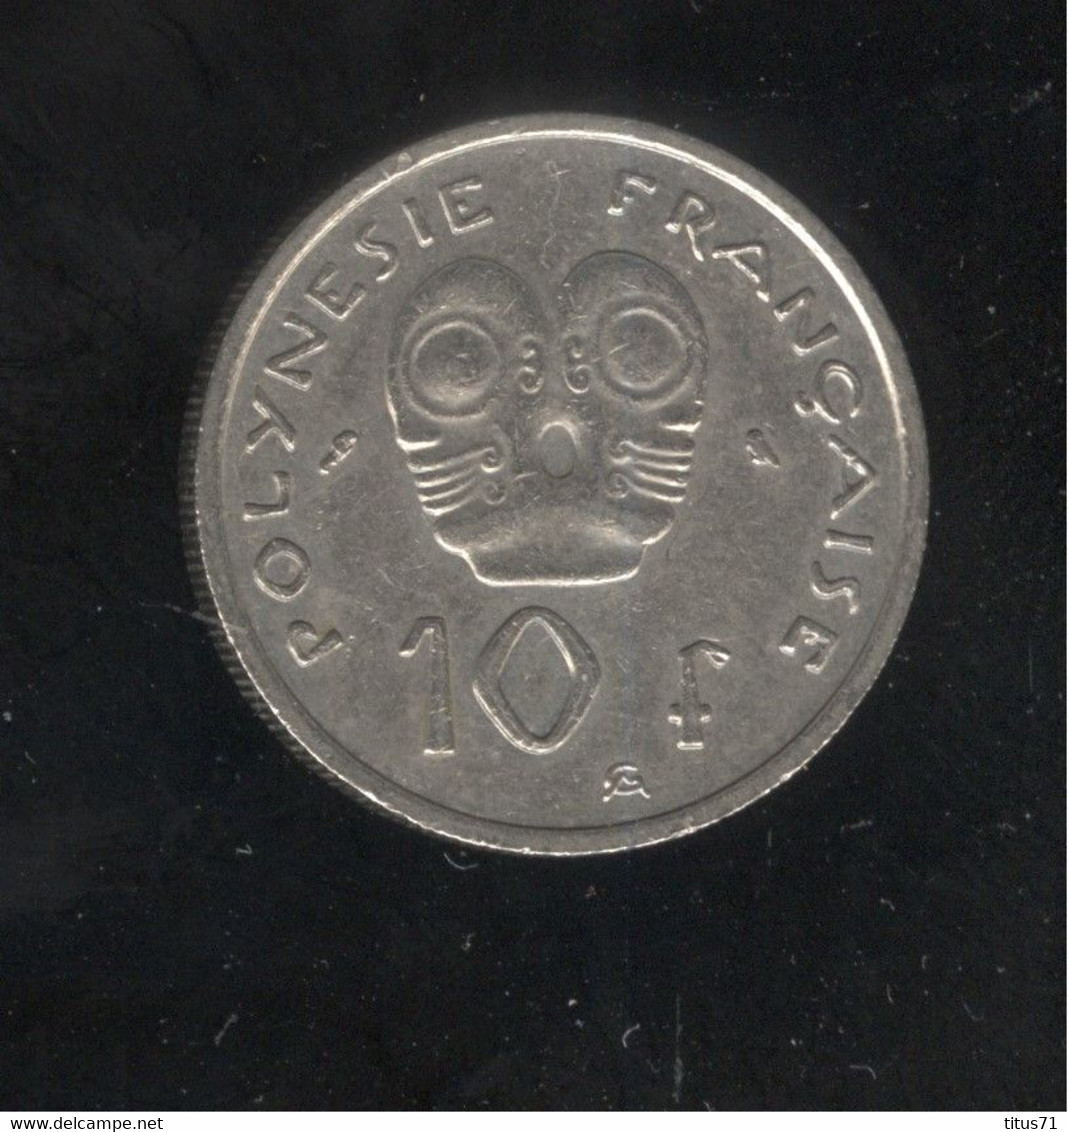 10 Francs Polynésie Française 1967 - Polinesia Francesa